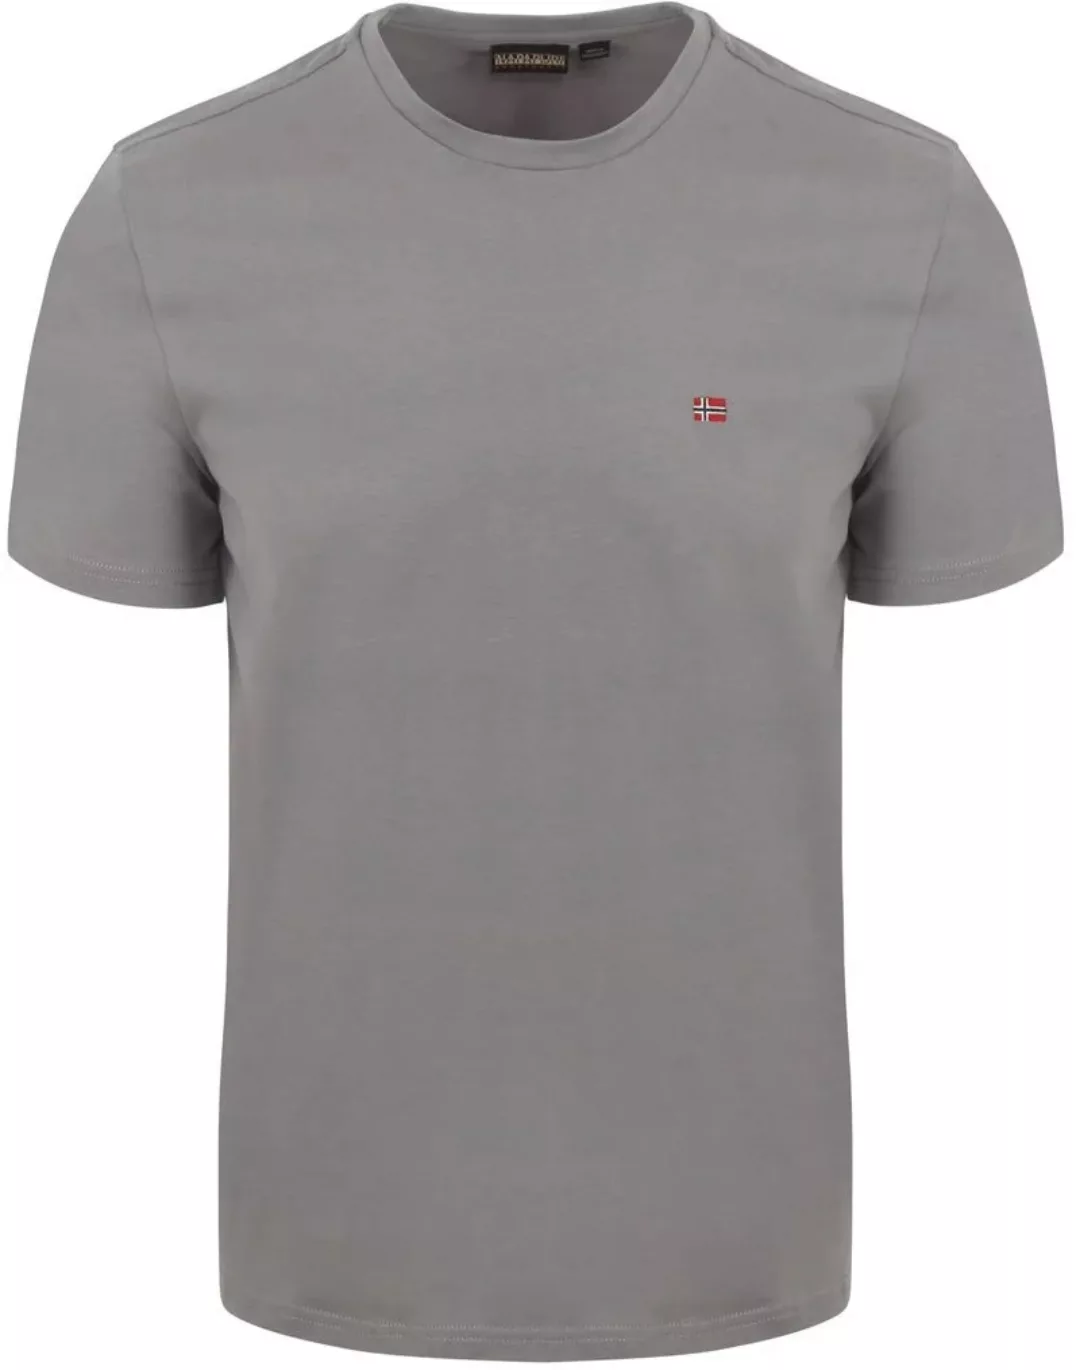 Napapijri Salis T-shirt Mid Grau - Größe XXL günstig online kaufen